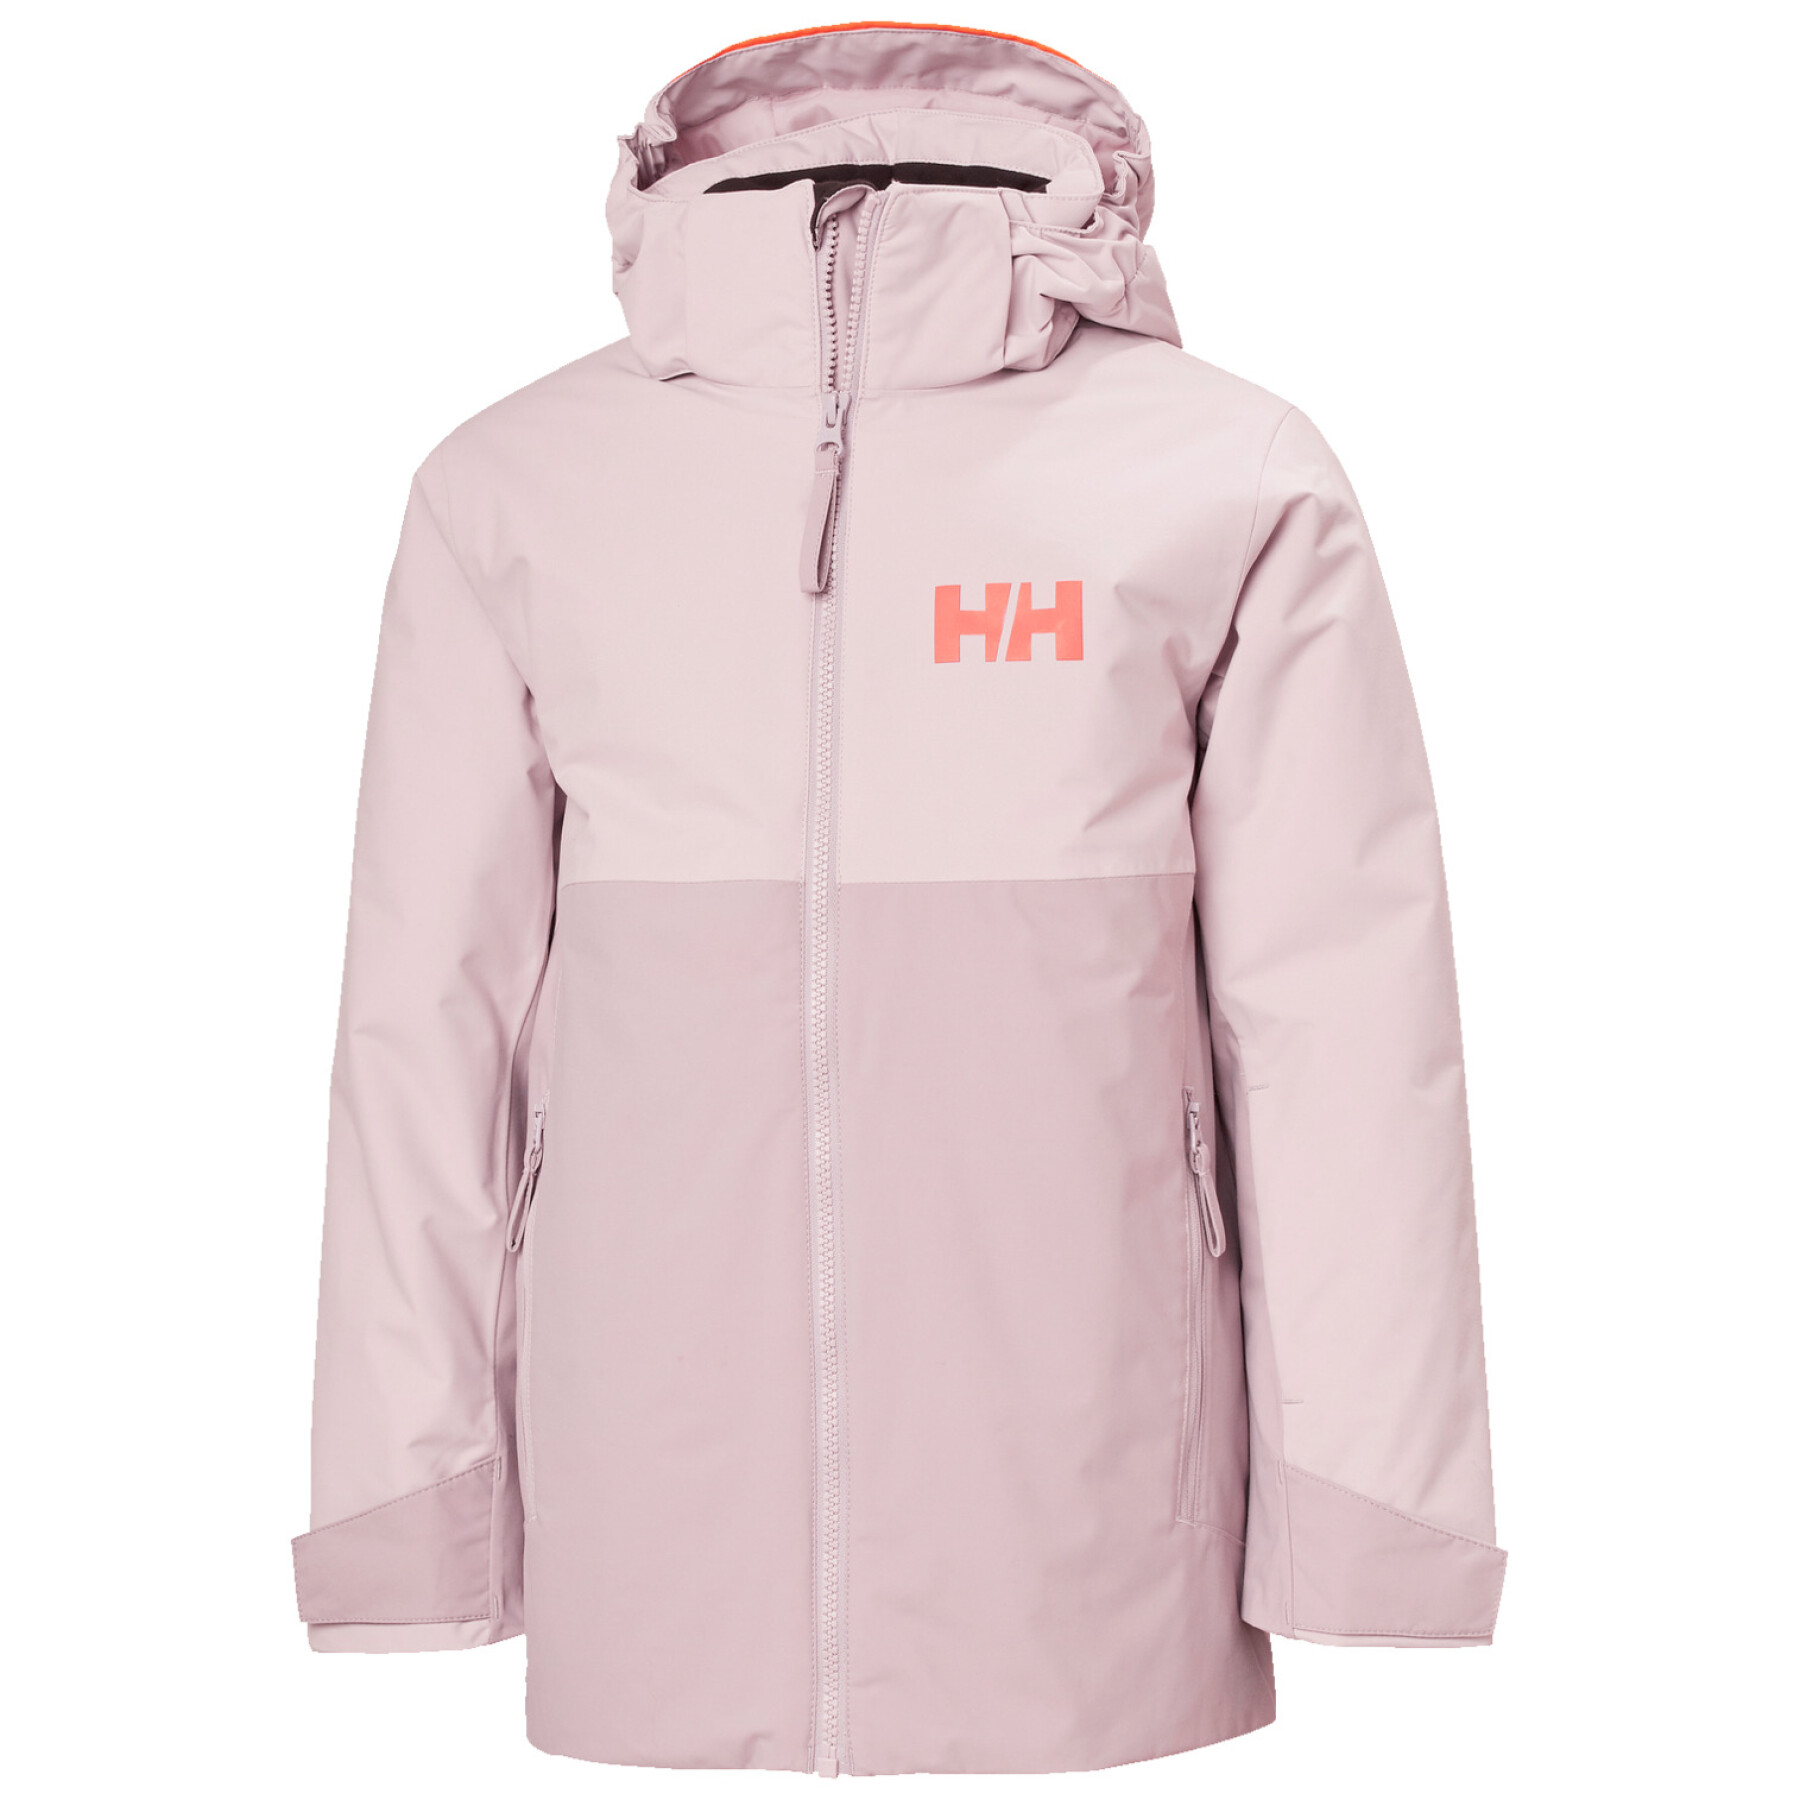 Waterdichte ski-jas voor kinderen Helly Hansen